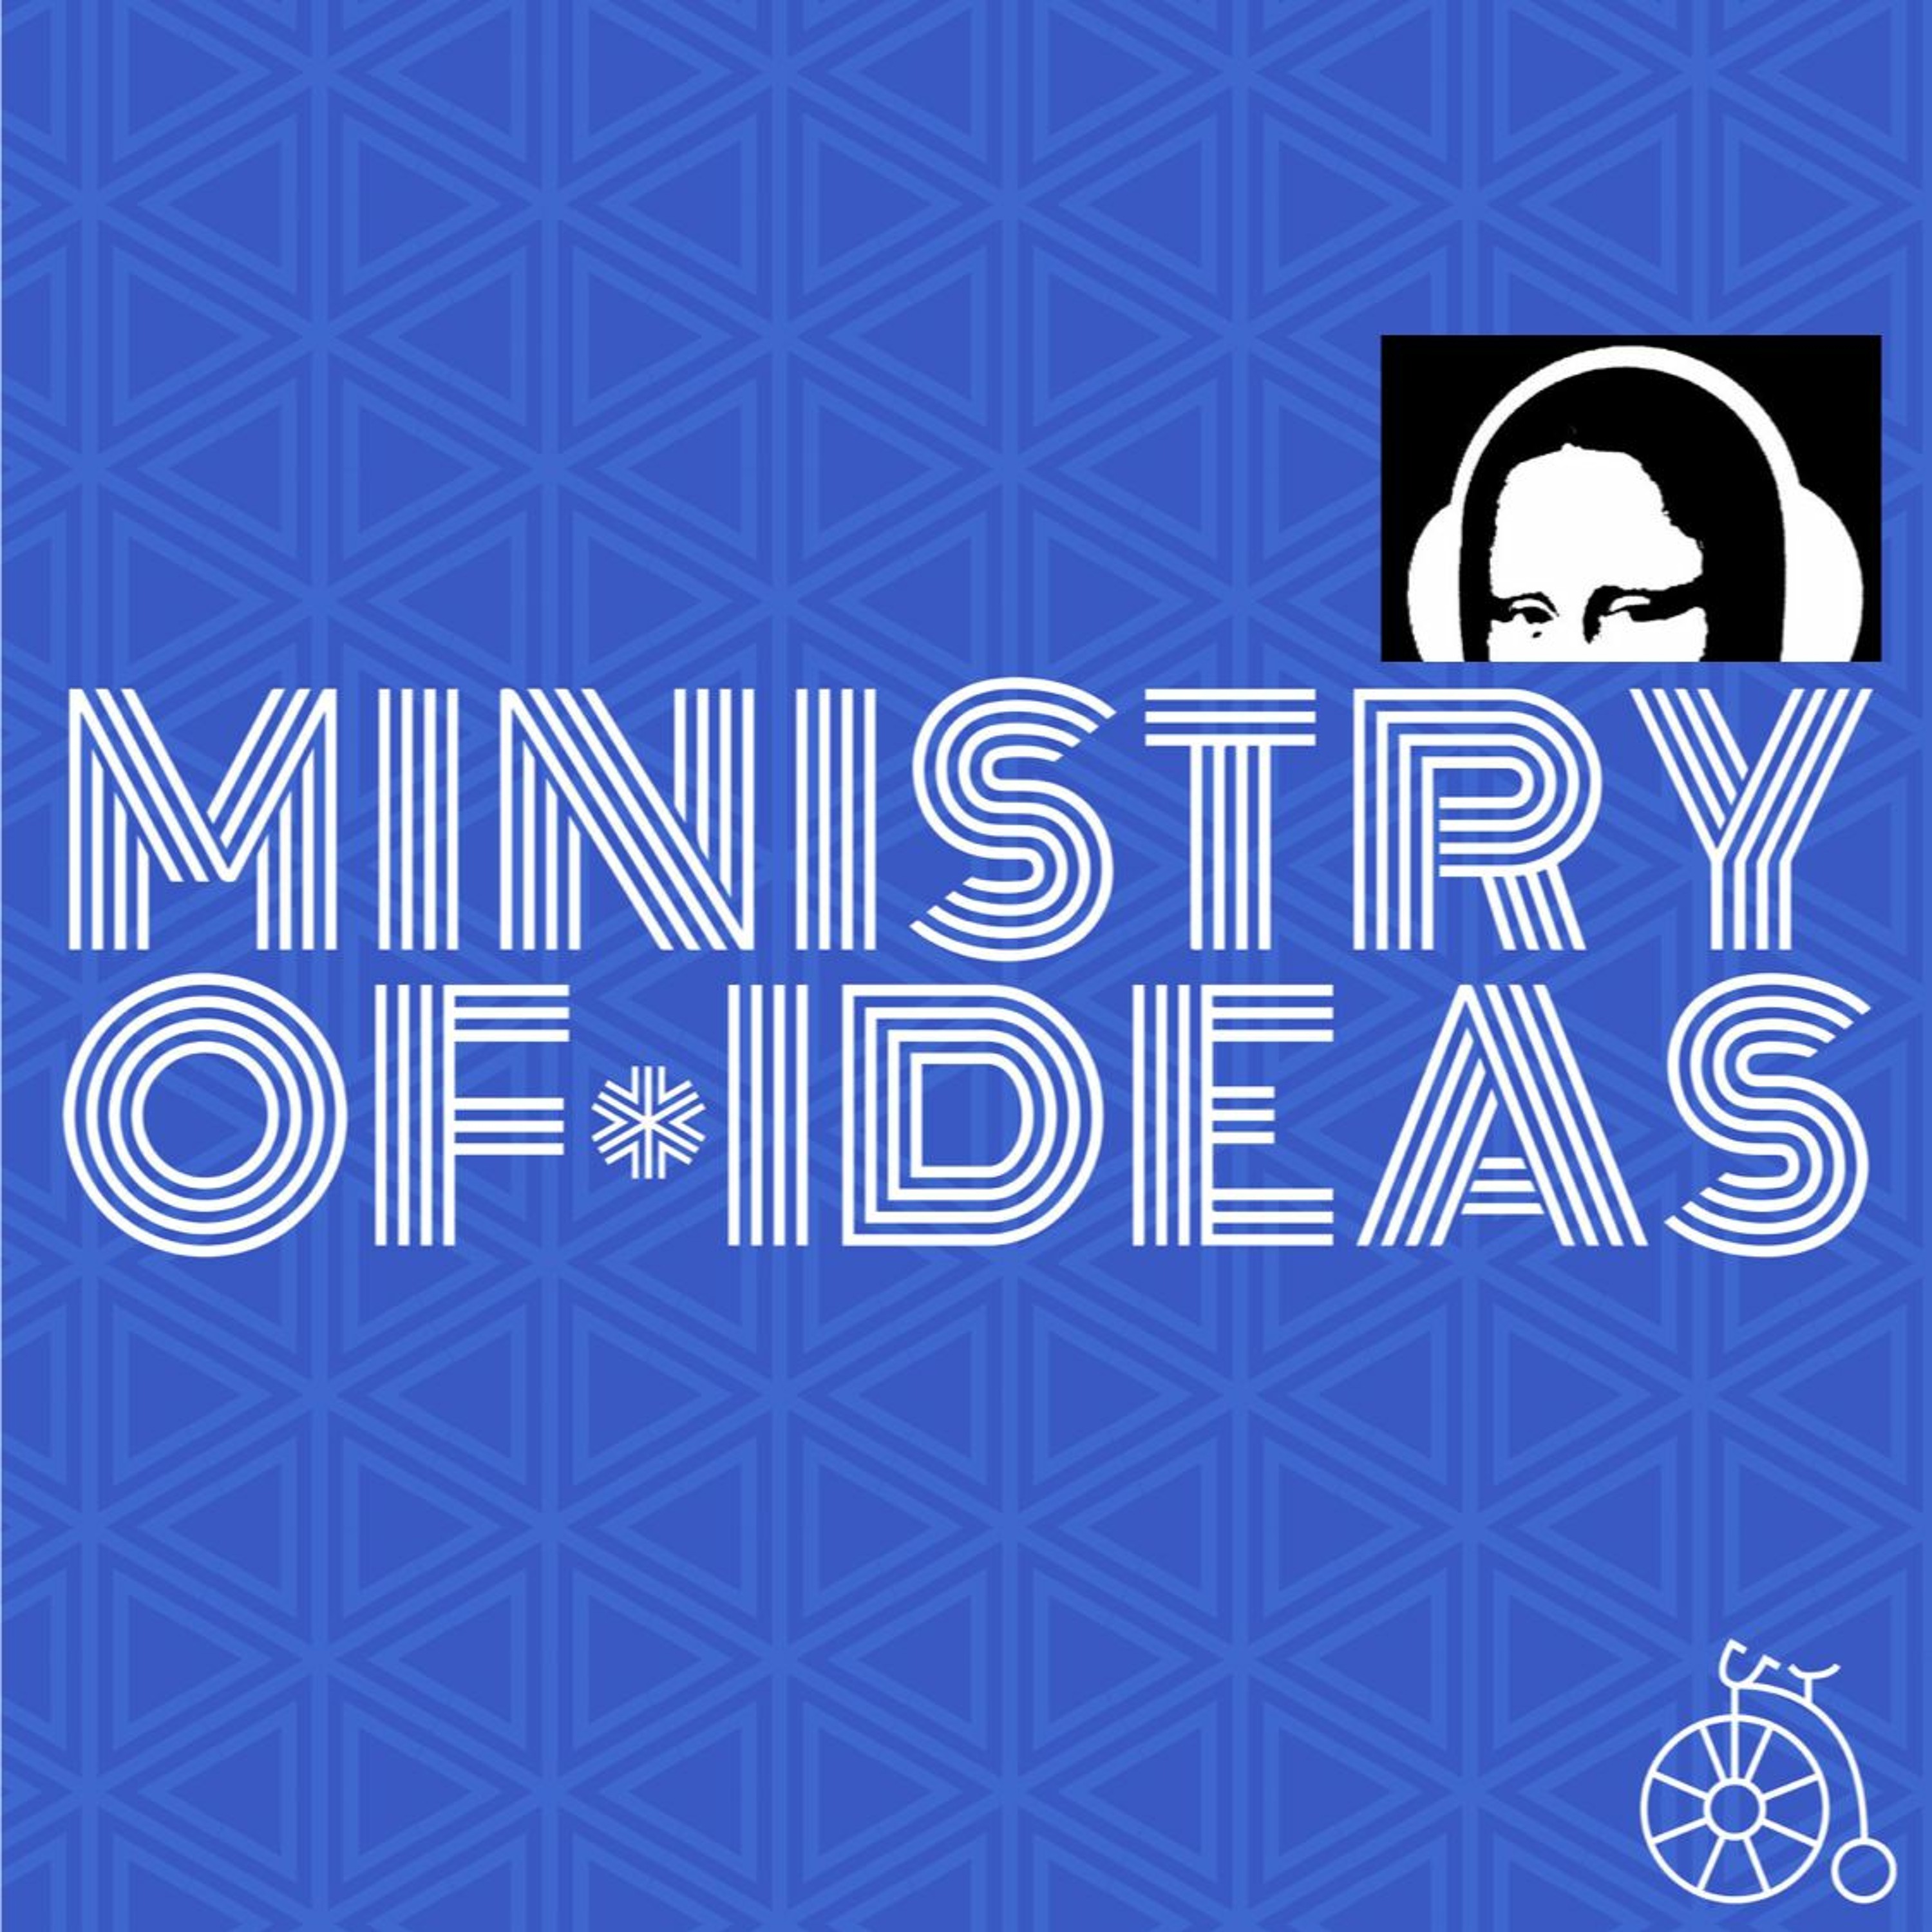 HiatusEp 0.4 - Hub & Spoke Presents: Ministry of Ideas